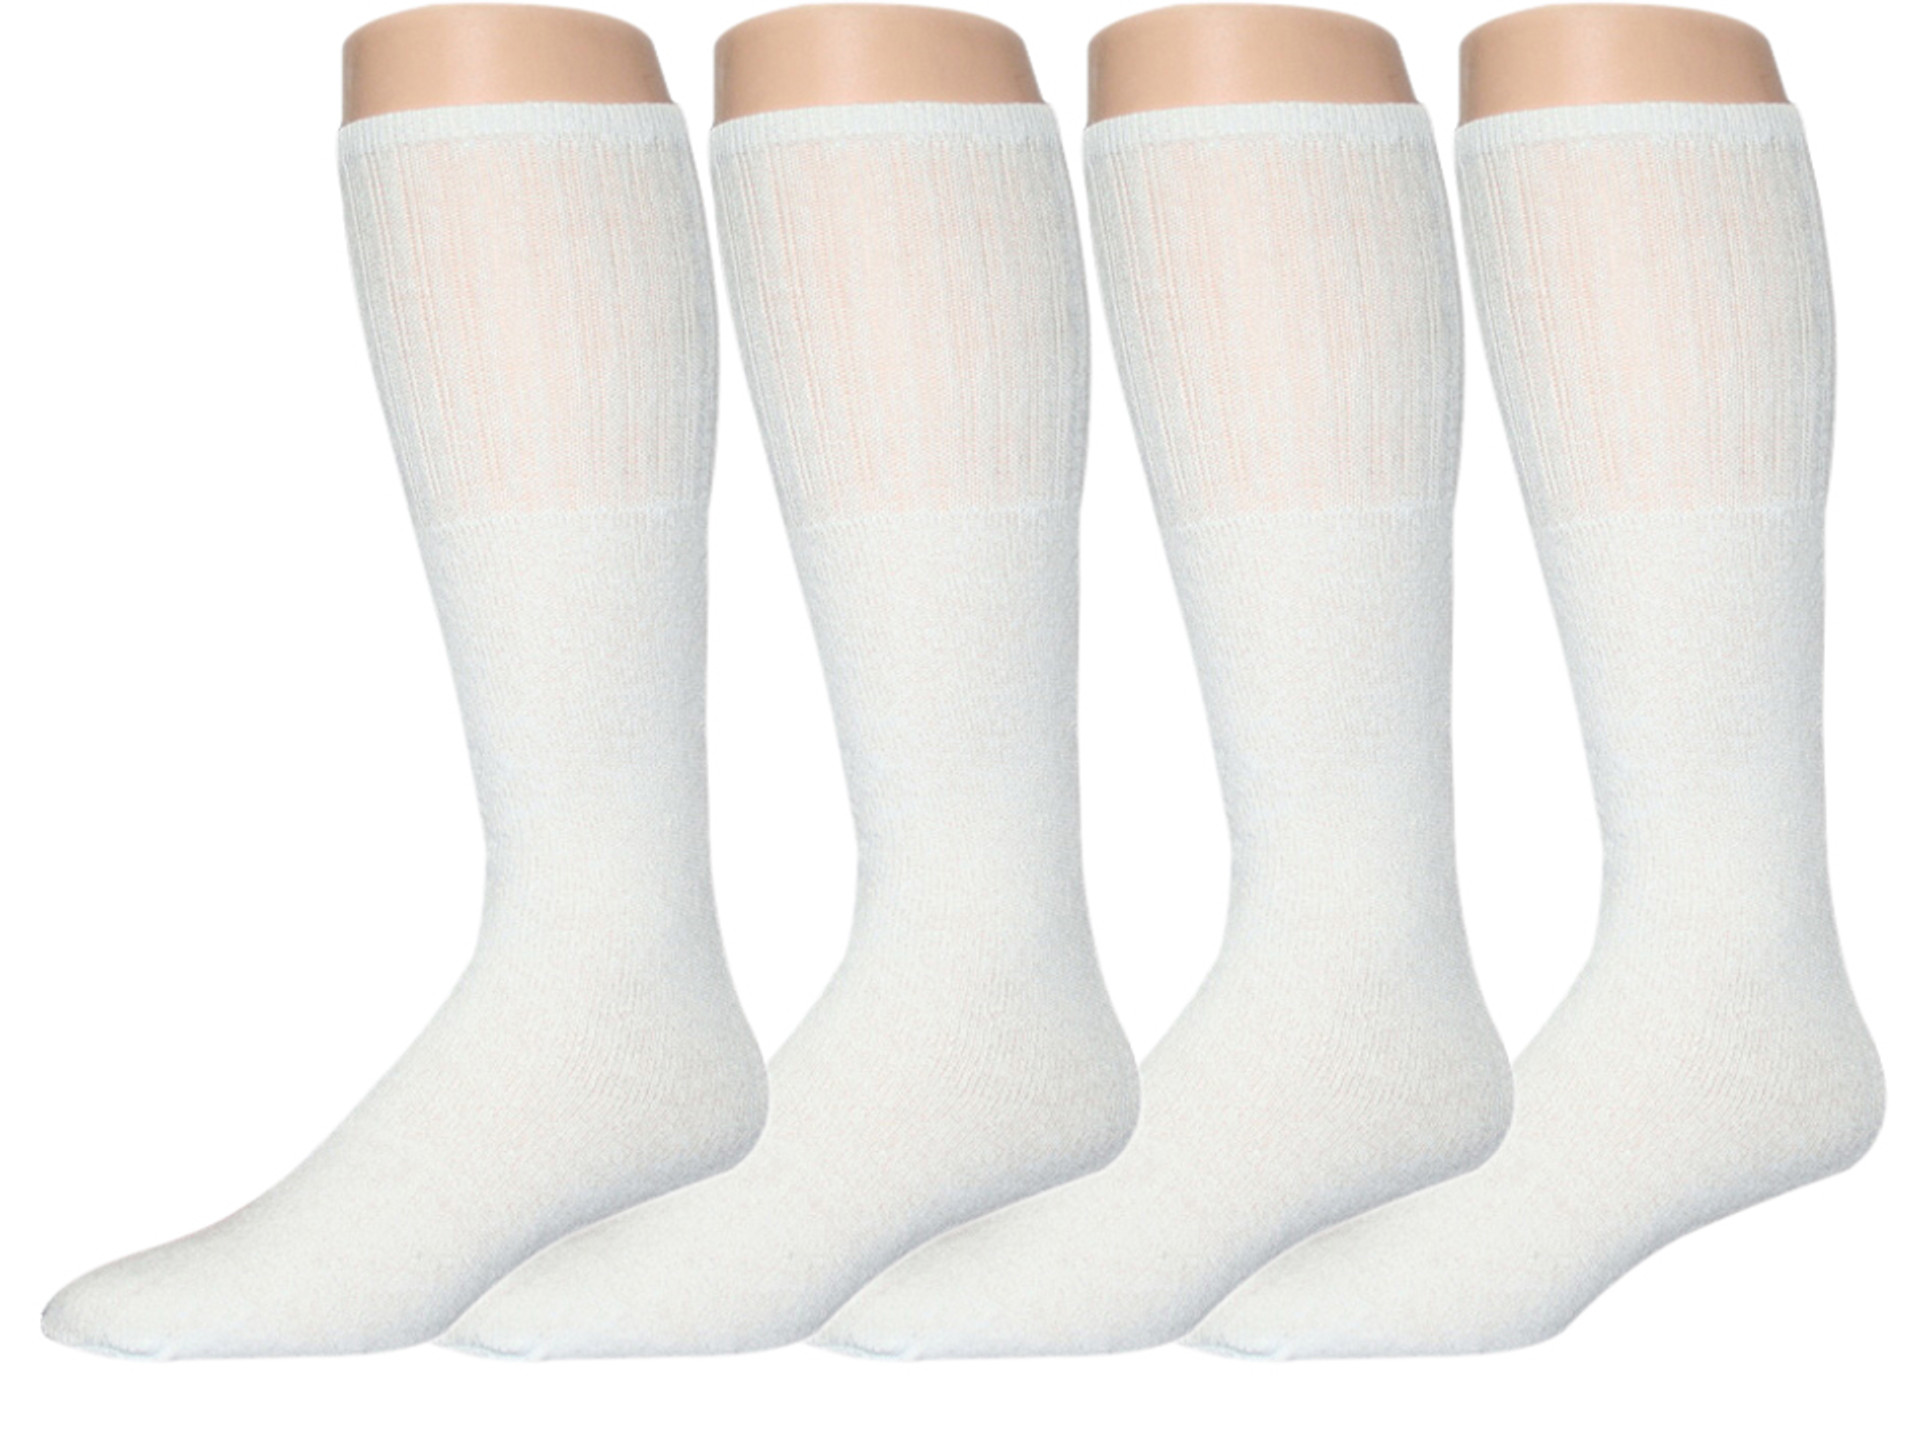 American Made Brand Tube Socks - White - Size 9-14 - (6 Pair Pack)